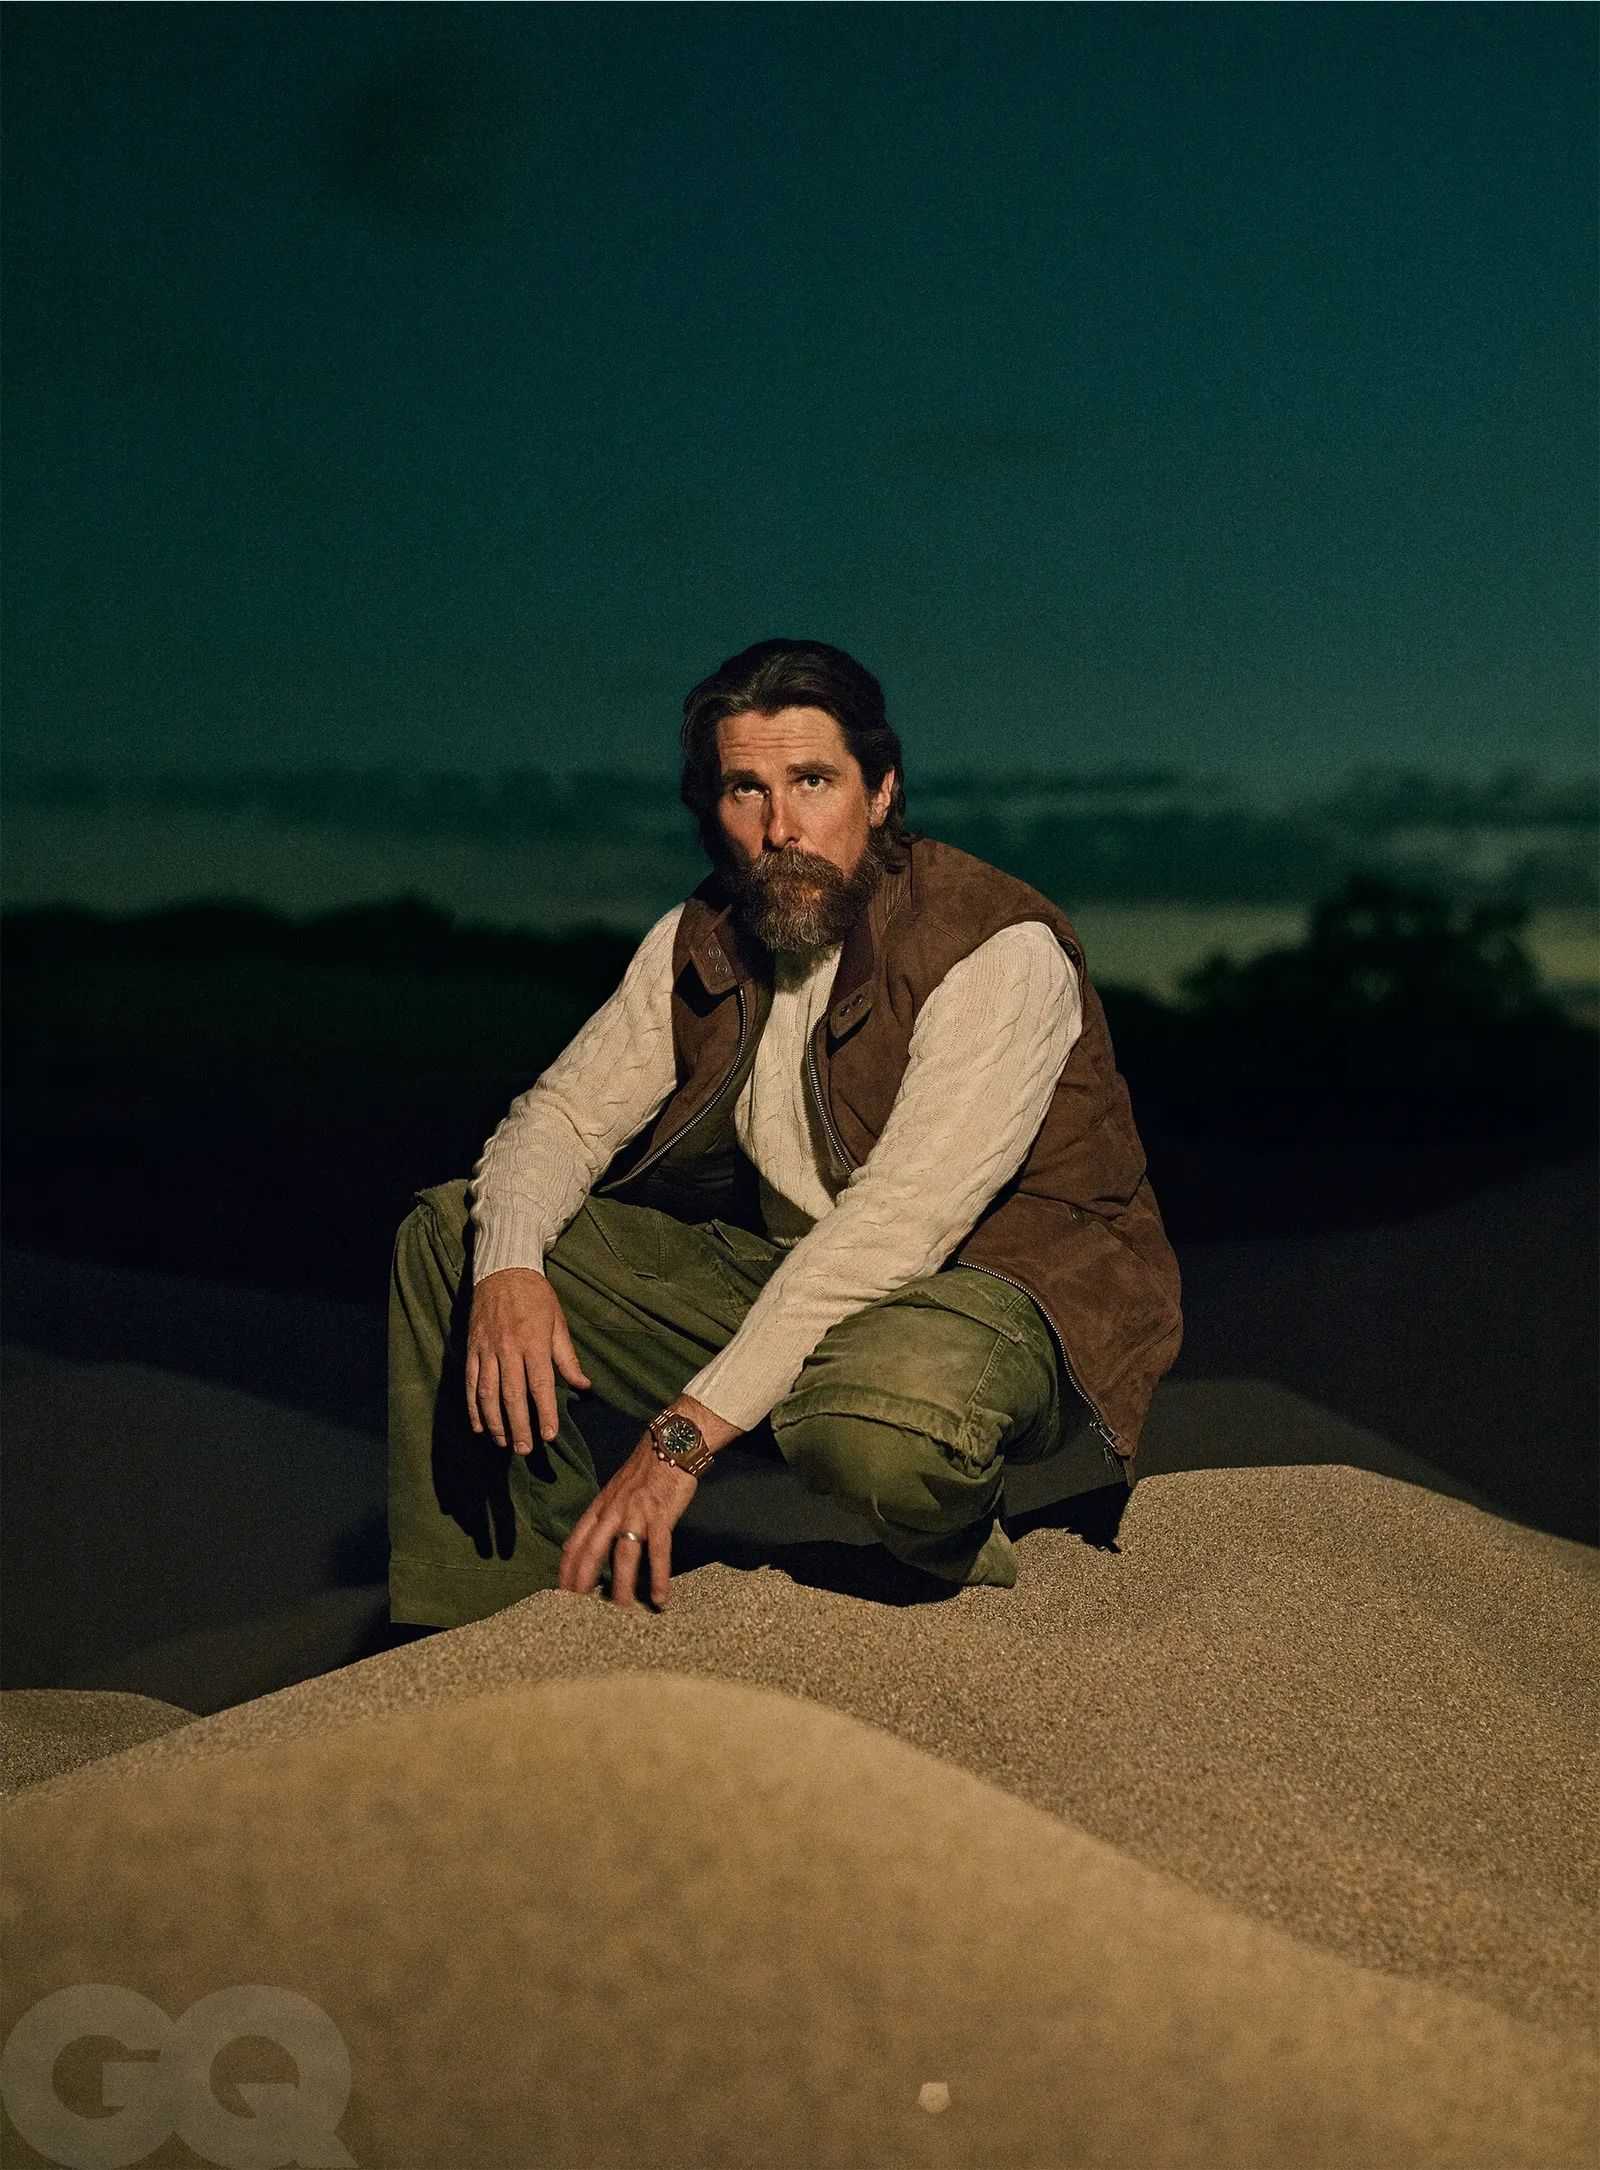 GQ Christian Bale - Gregory Harris - 4134